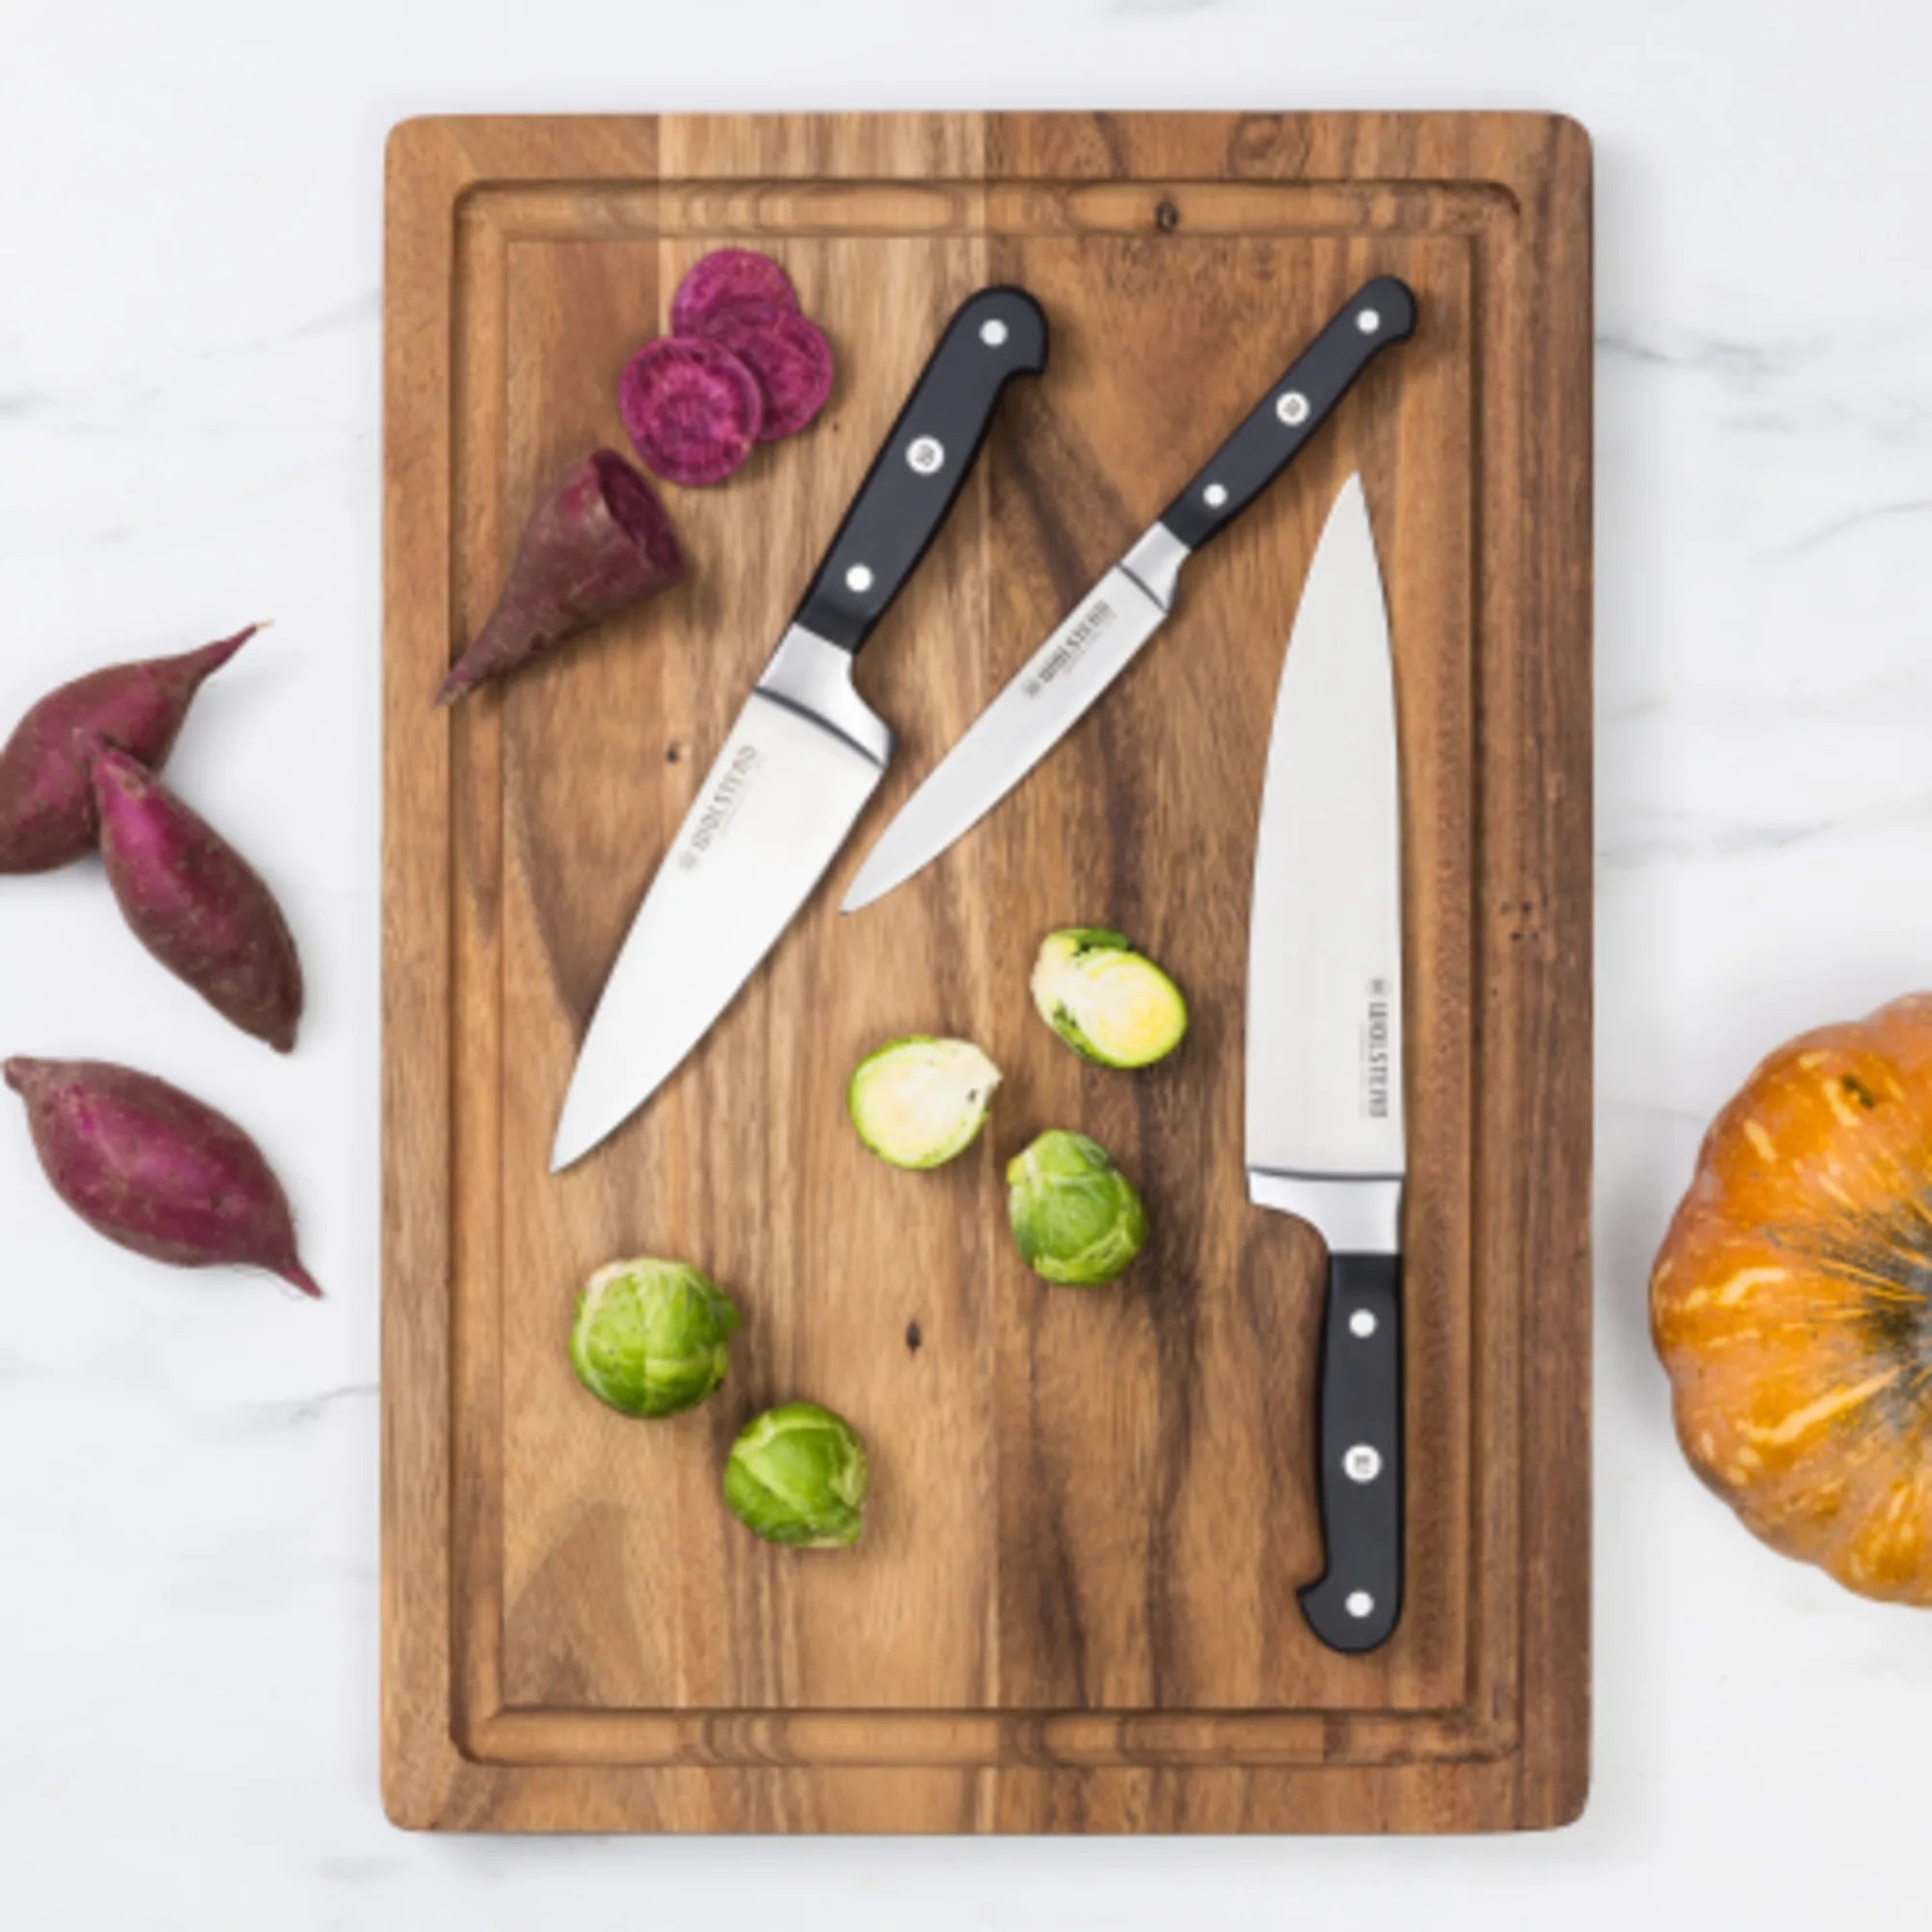 CORE Kitchen Perfect Precision 3pc. Prep Knife Set w/ Blade Guard - NEW